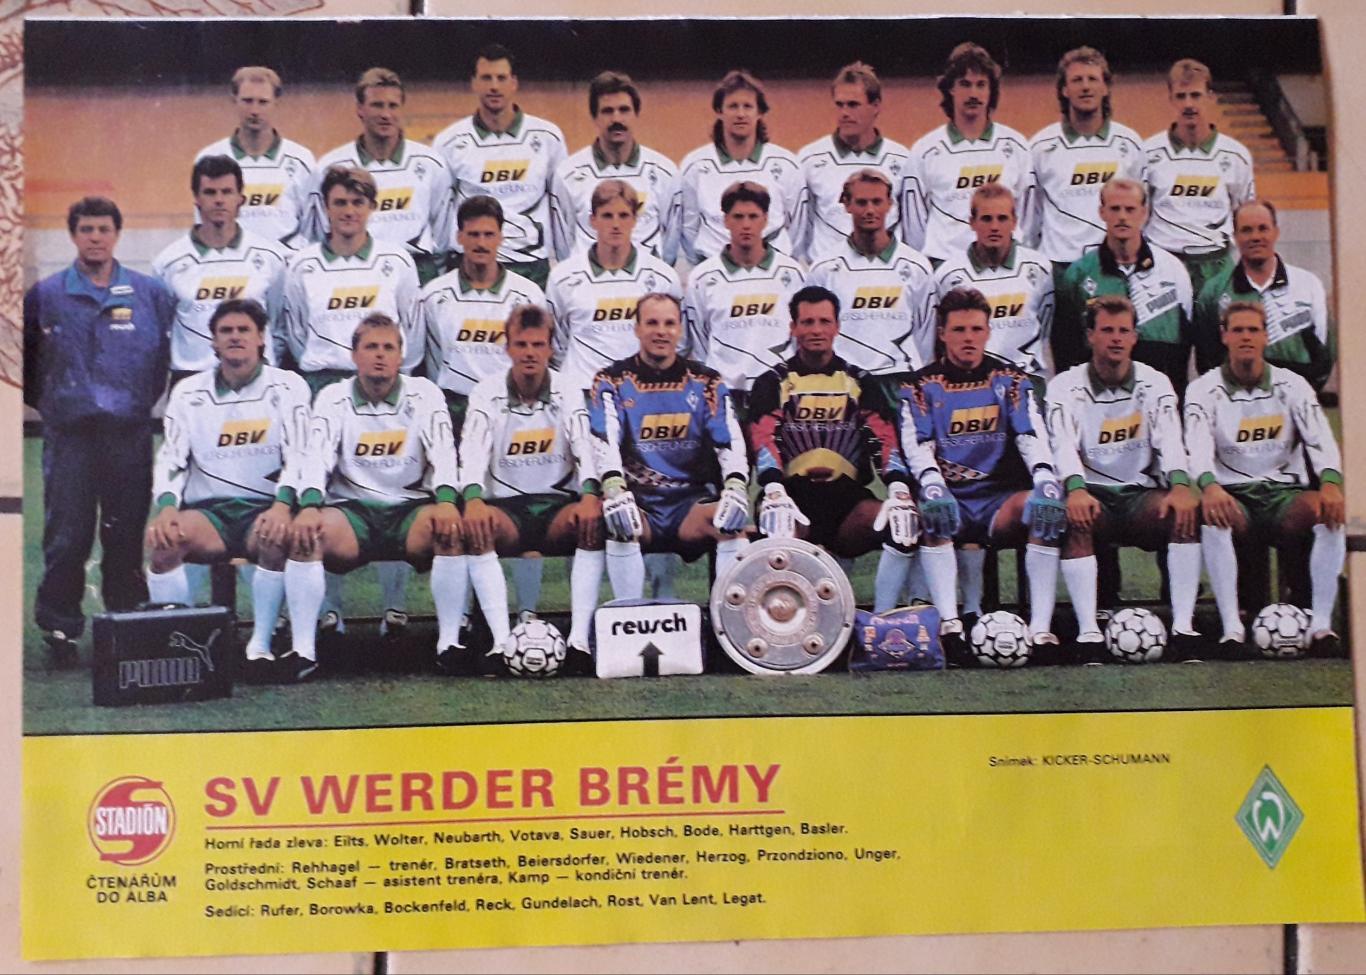 Werder Bremen.Плакат формата А4 из журнала Stadion.